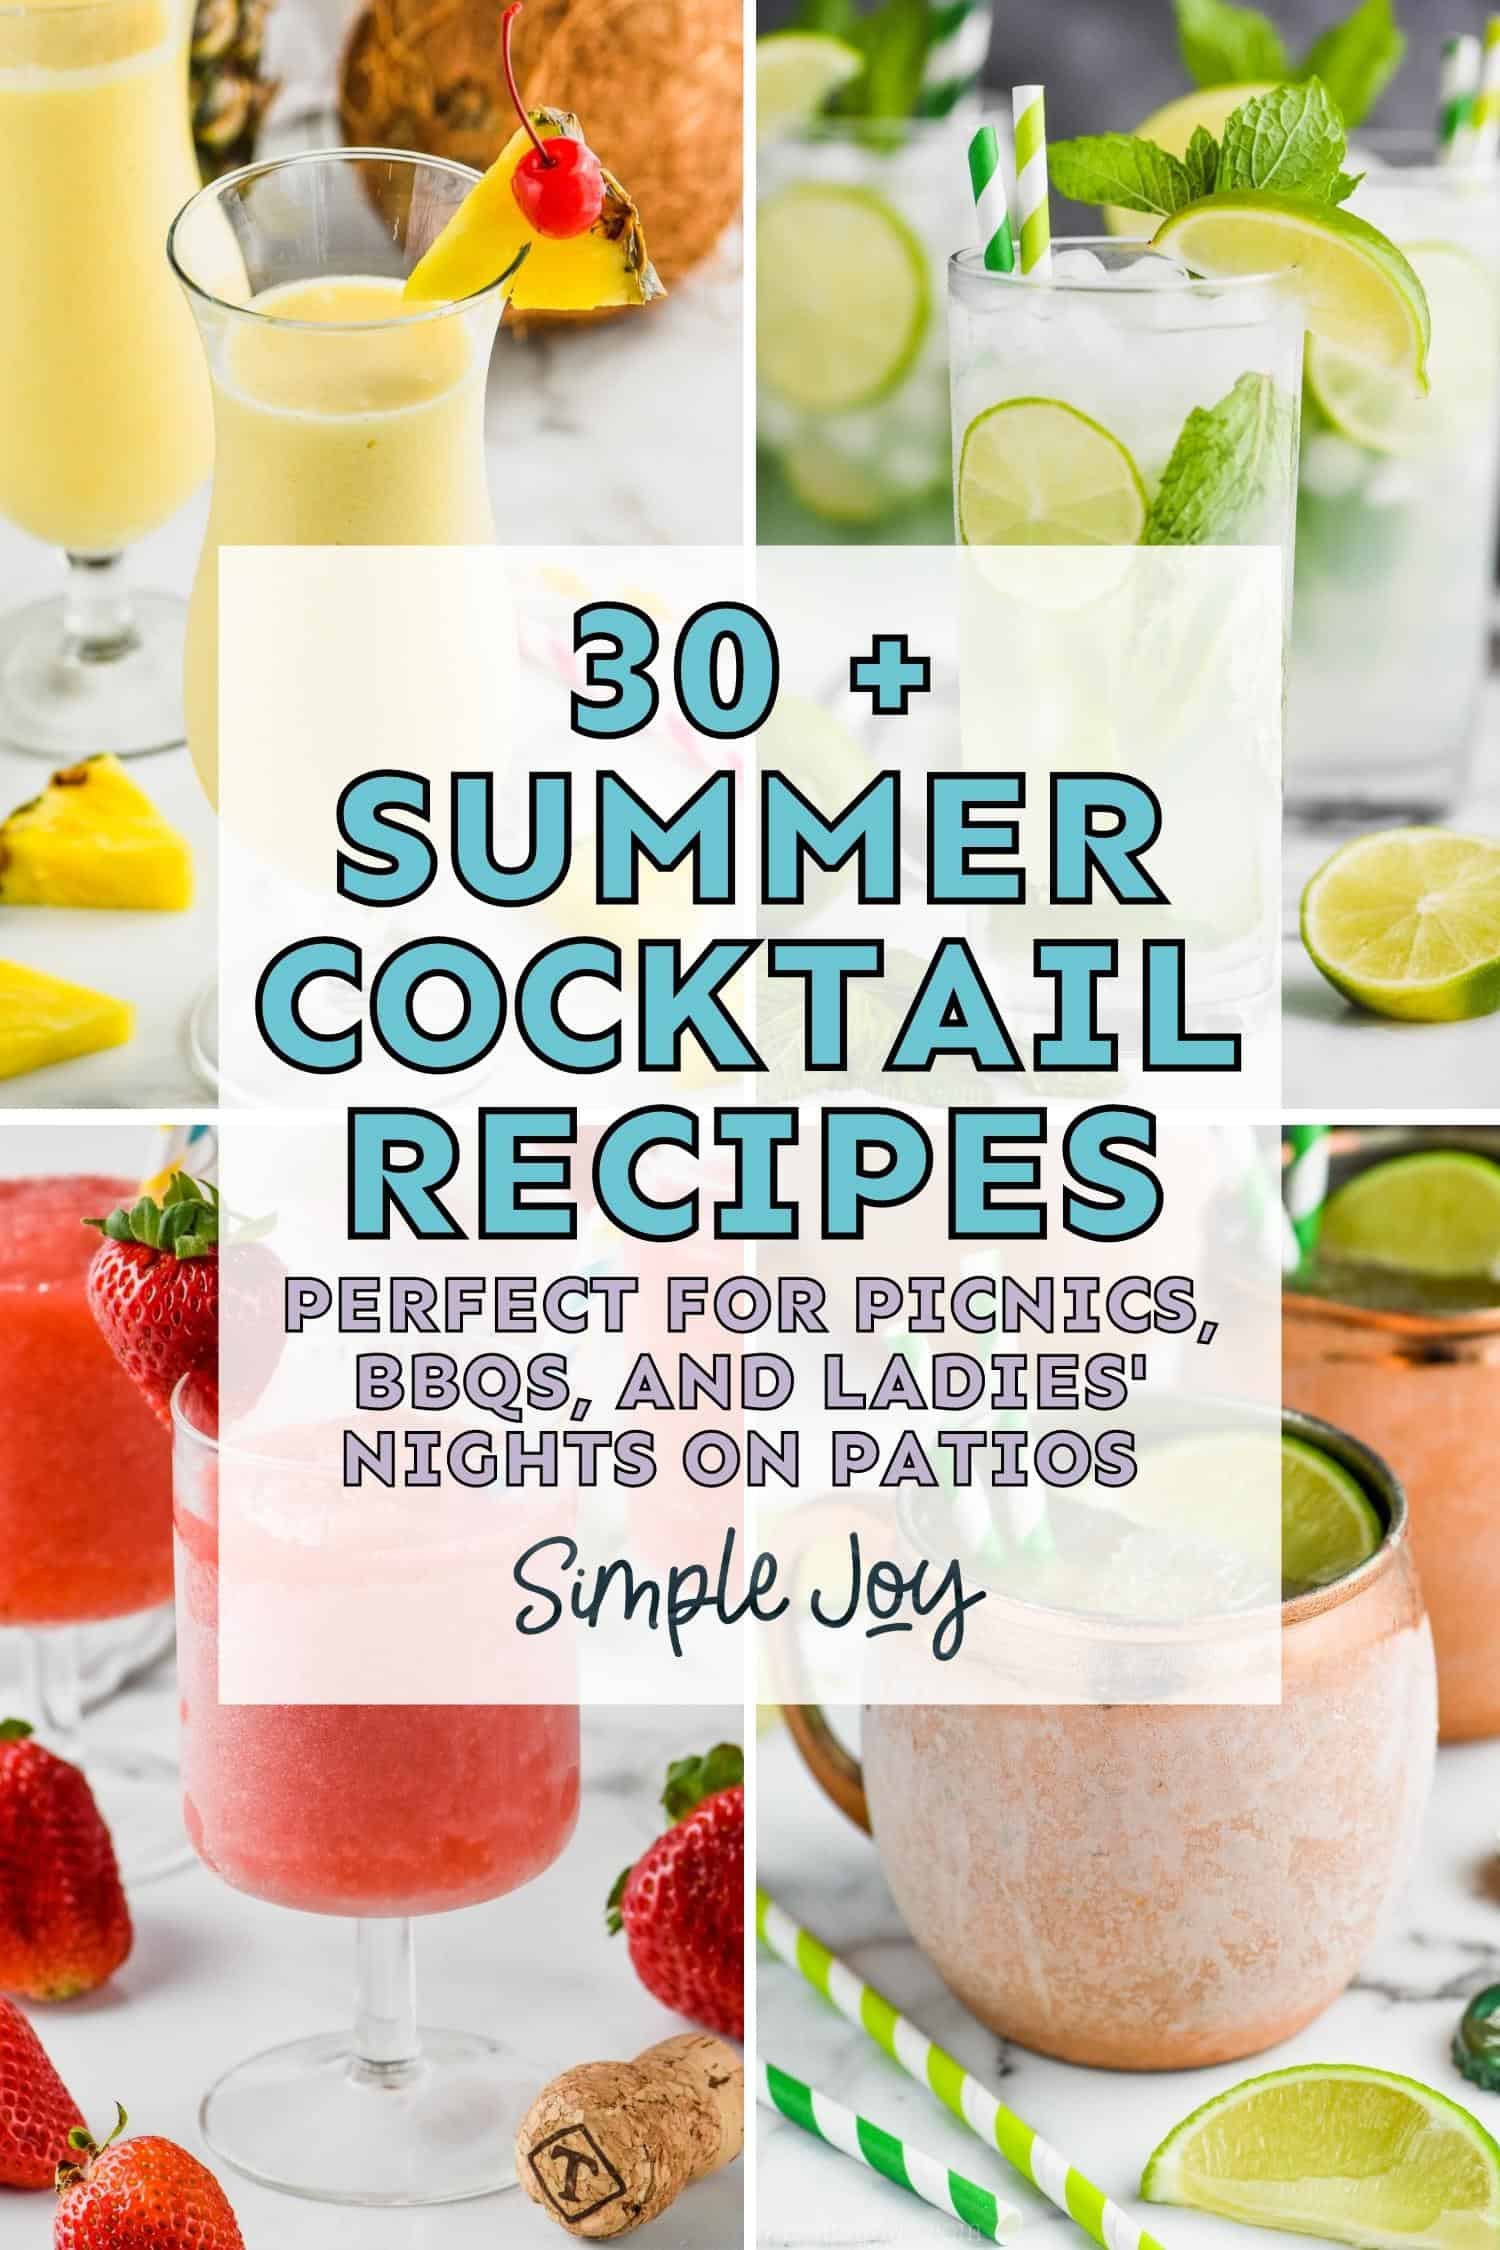 https://www.simplejoy.com/wp-content/uploads/2015/05/Summer-Cocktails-Main.jpg